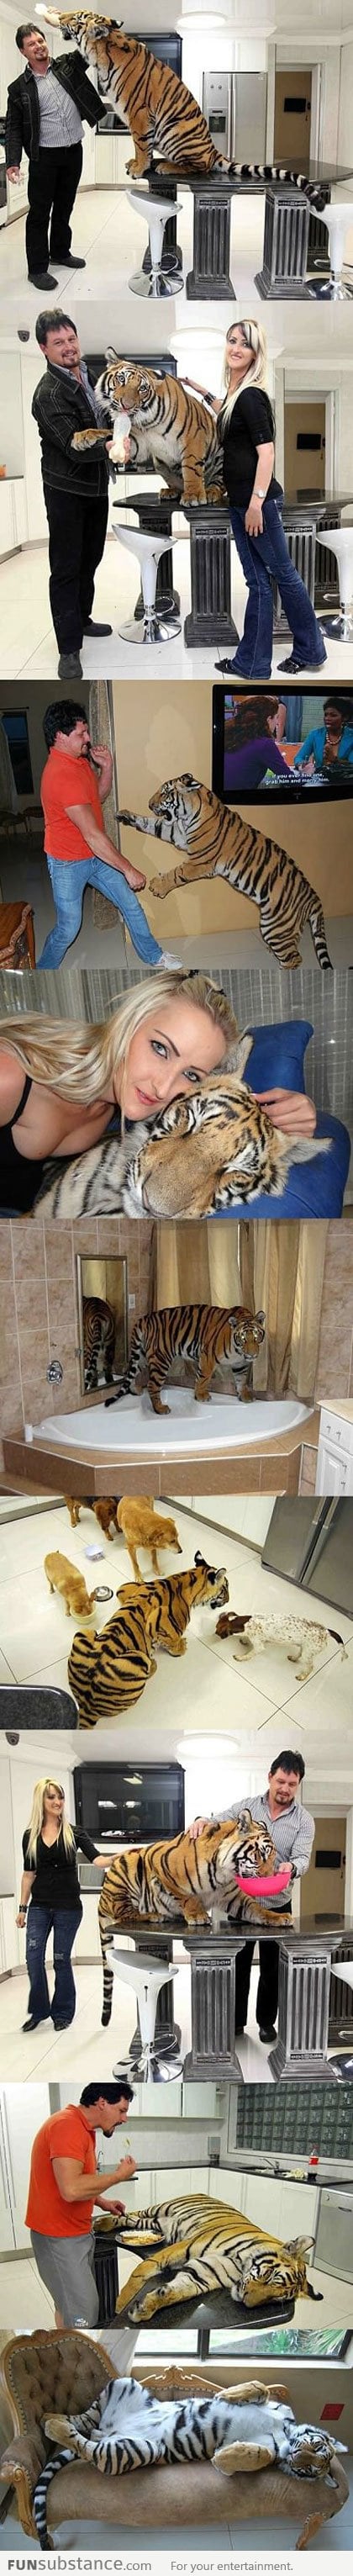 Family Adopts Tiger